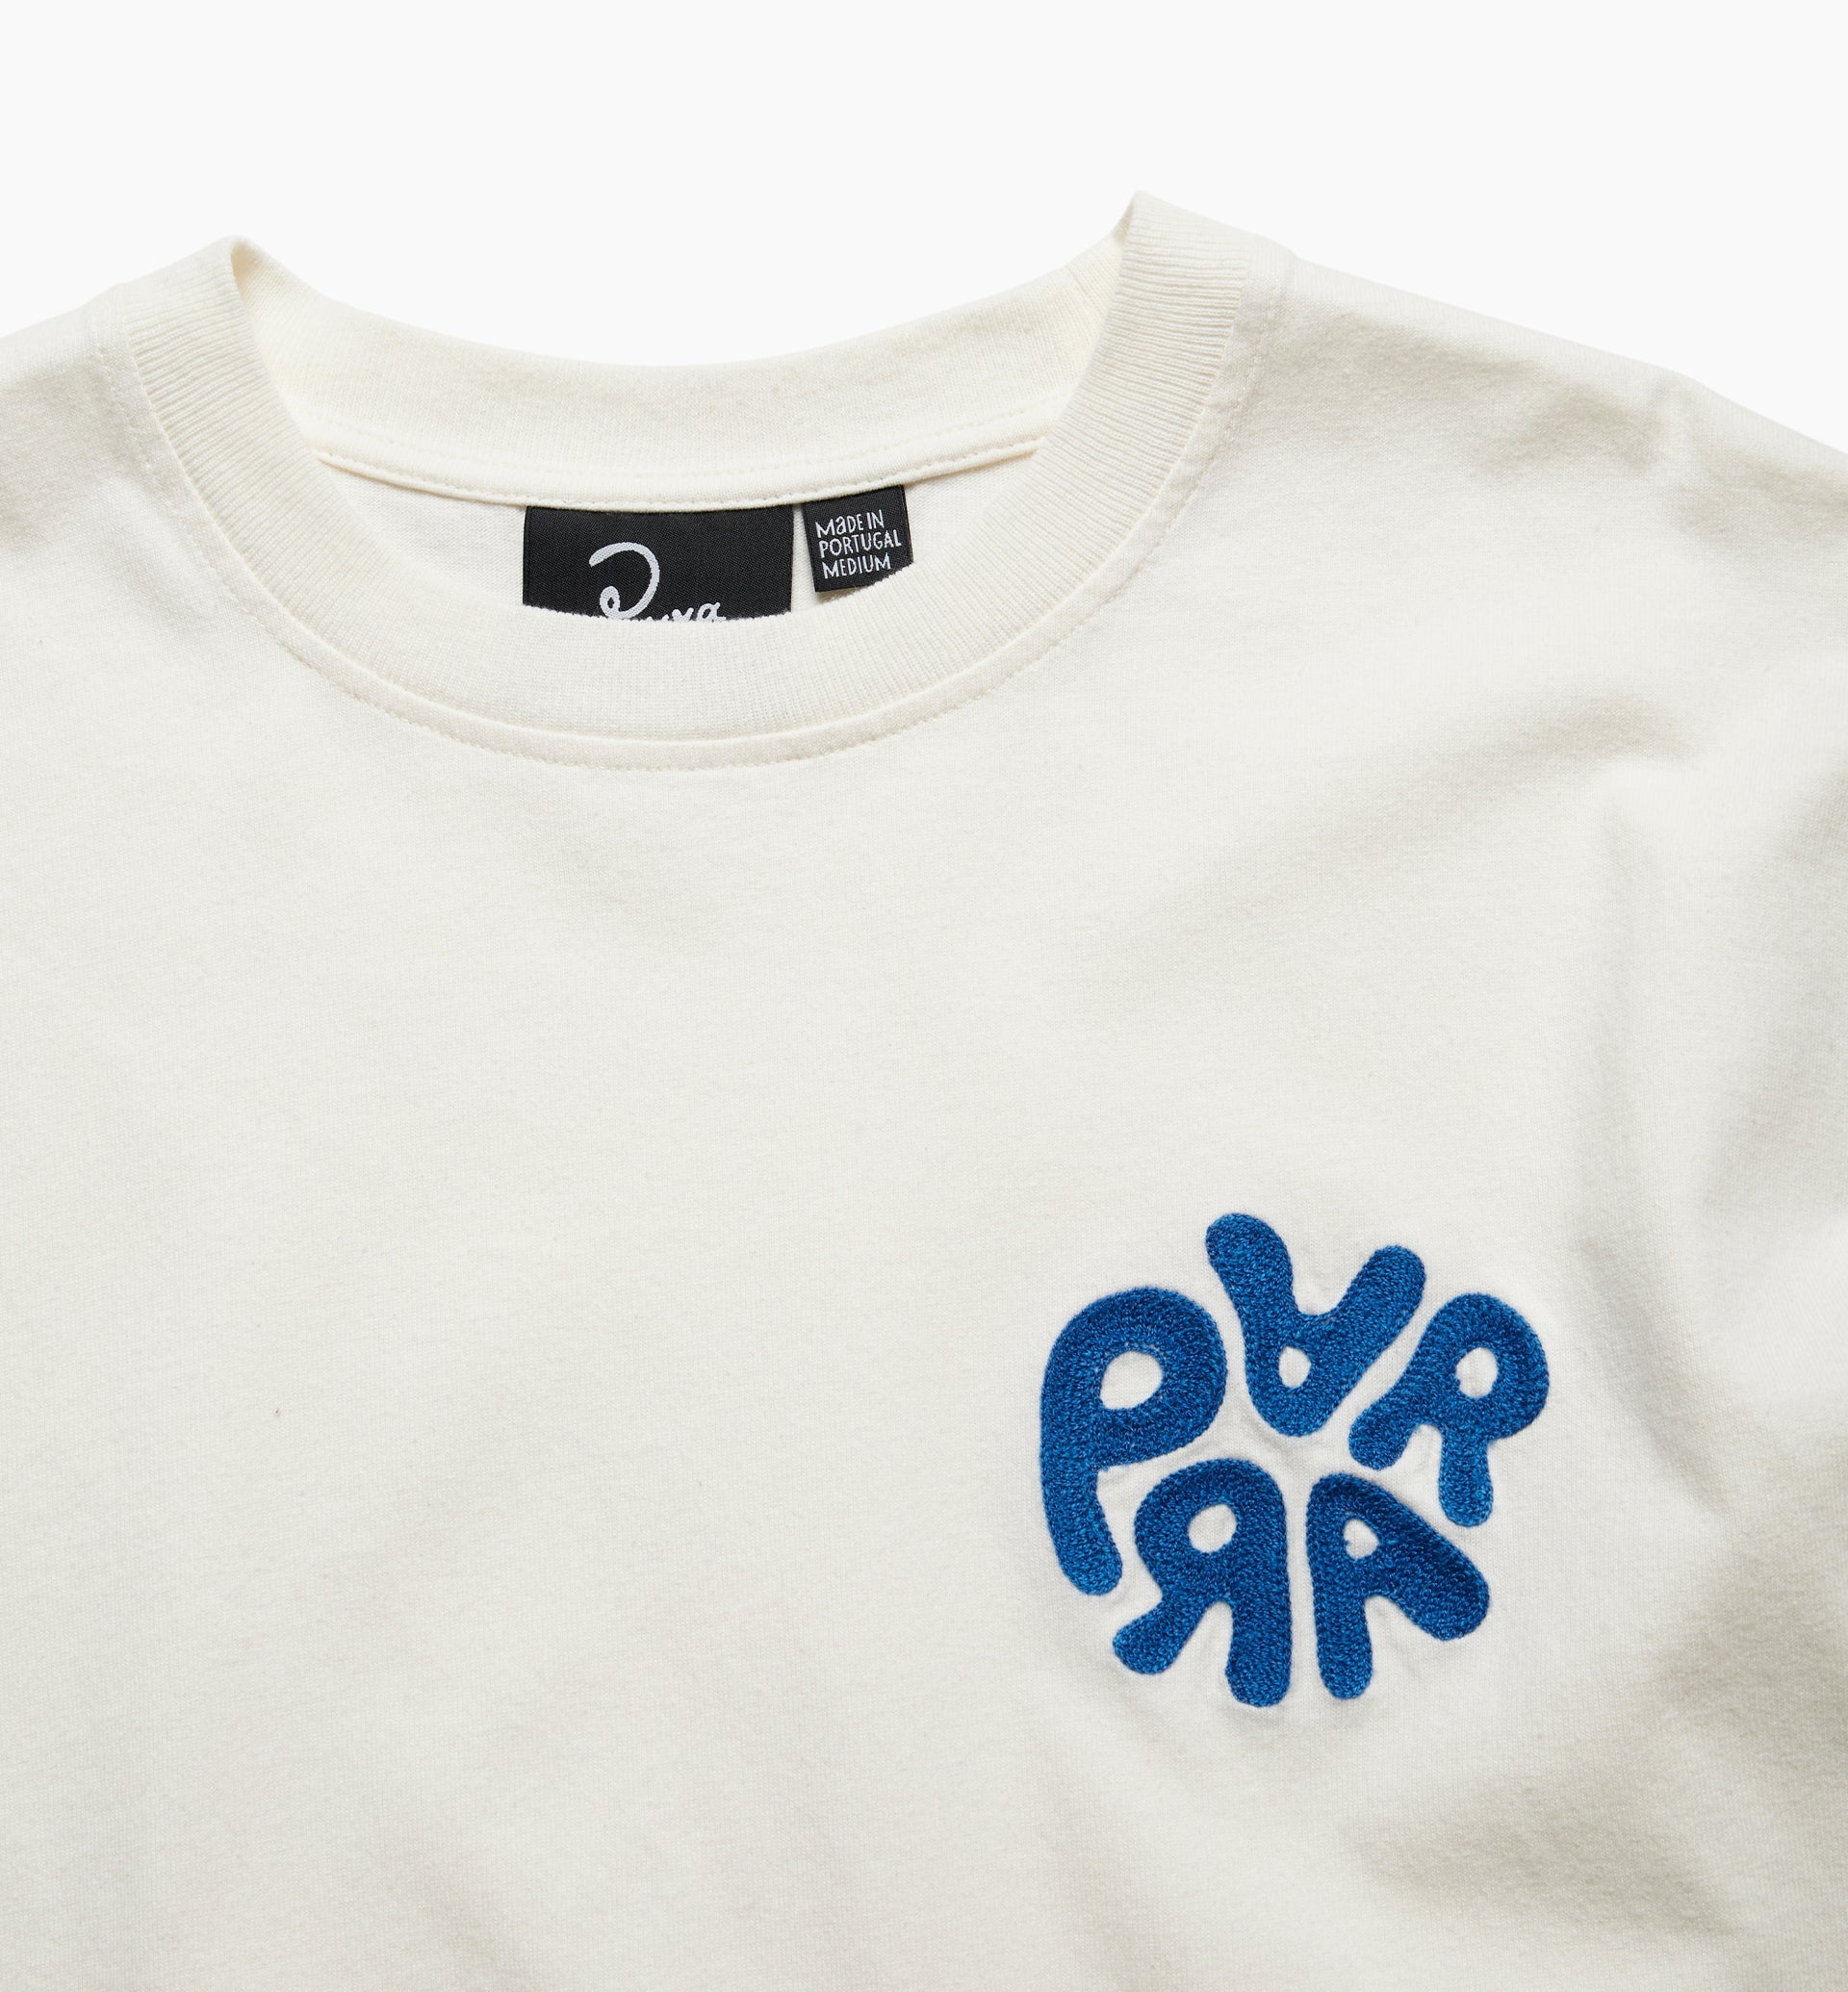 Parra - 1976 logo t-shirt